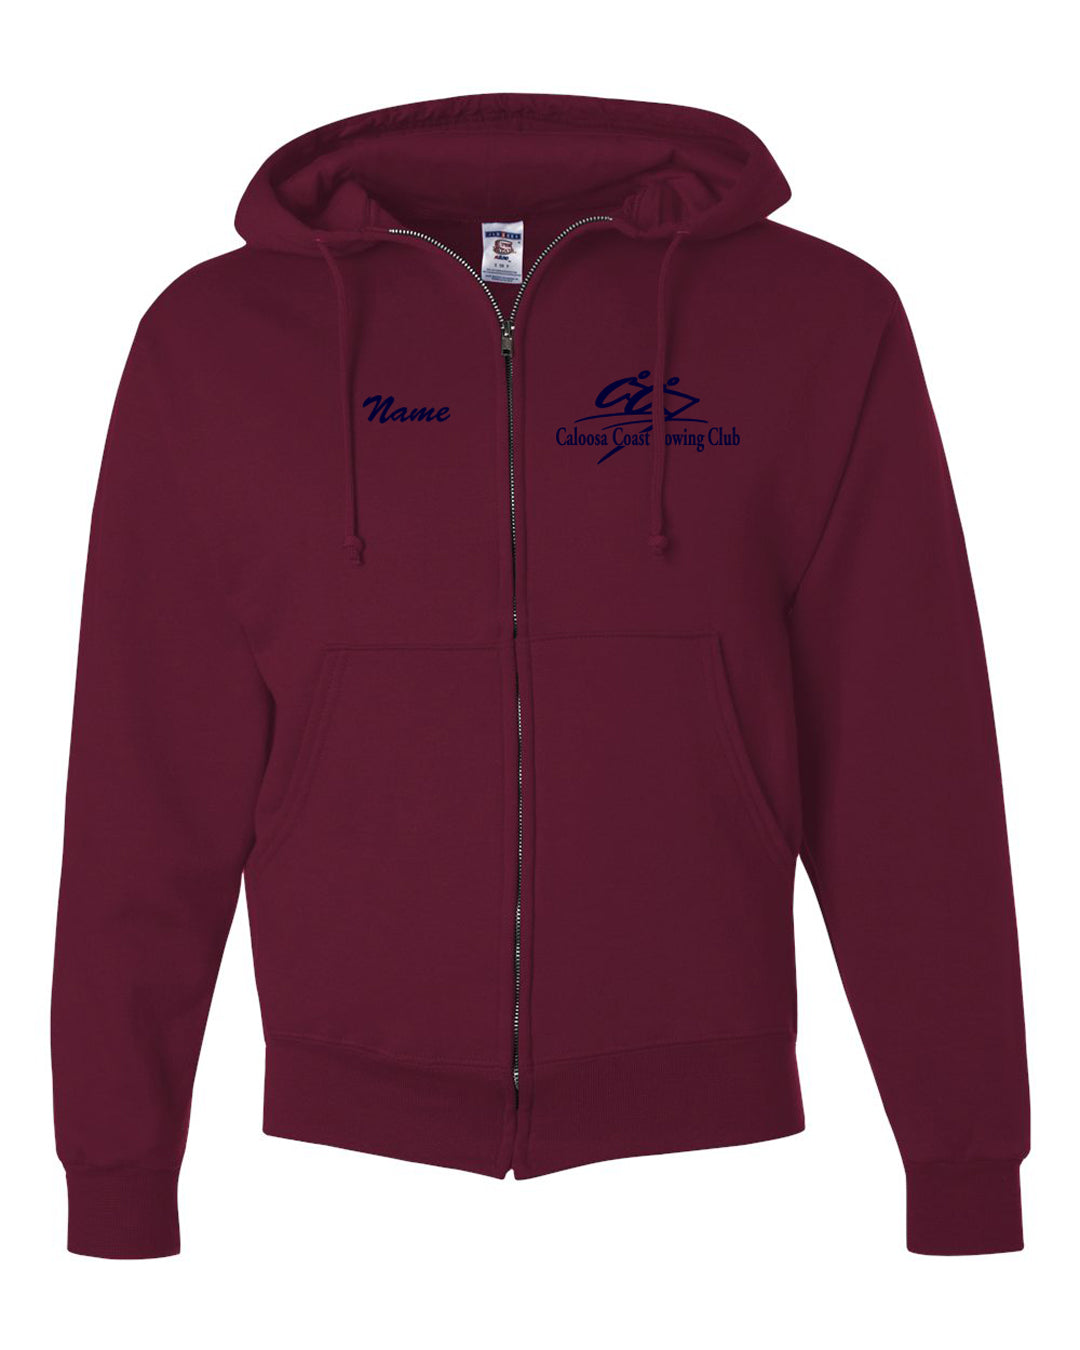 50/50 Zipper Hooded Cape Coral Rowing Club Sweatshirt